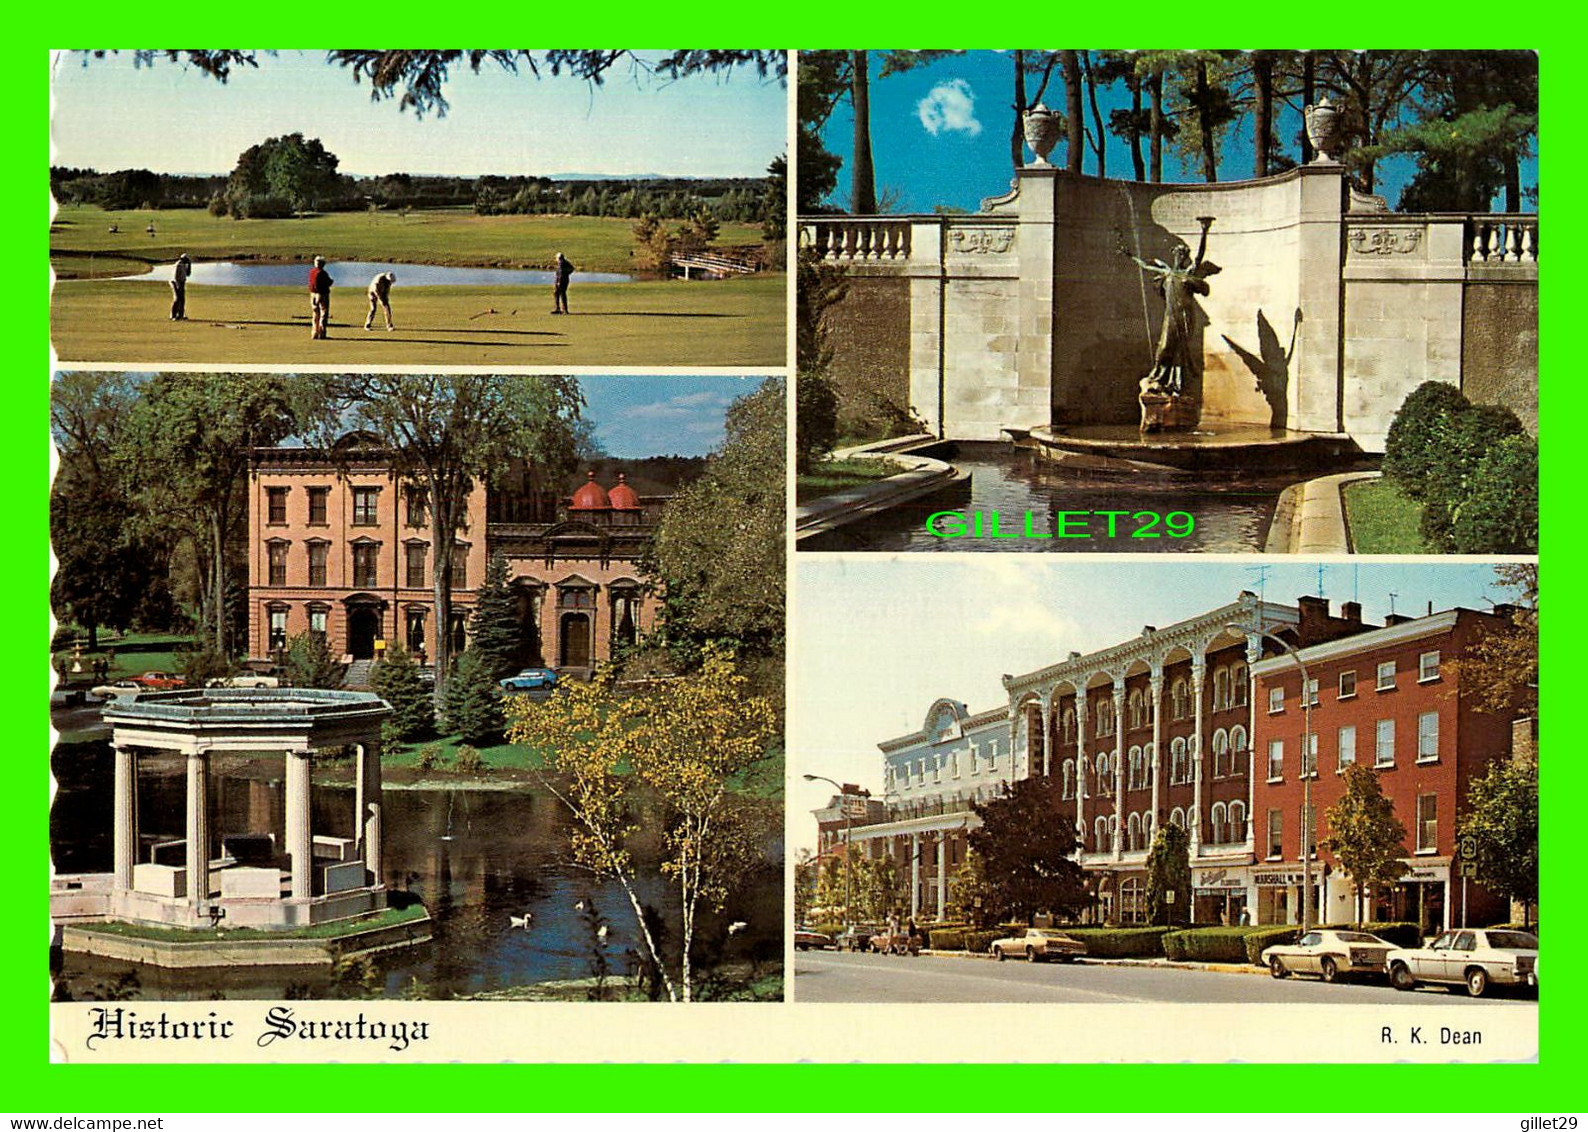 SARATOGA SPRINGS, NY - 4 MULTIVUES - THE HISTORIC CITY - DEXTER PRESS - R. K. DEAN - - Saratoga Springs